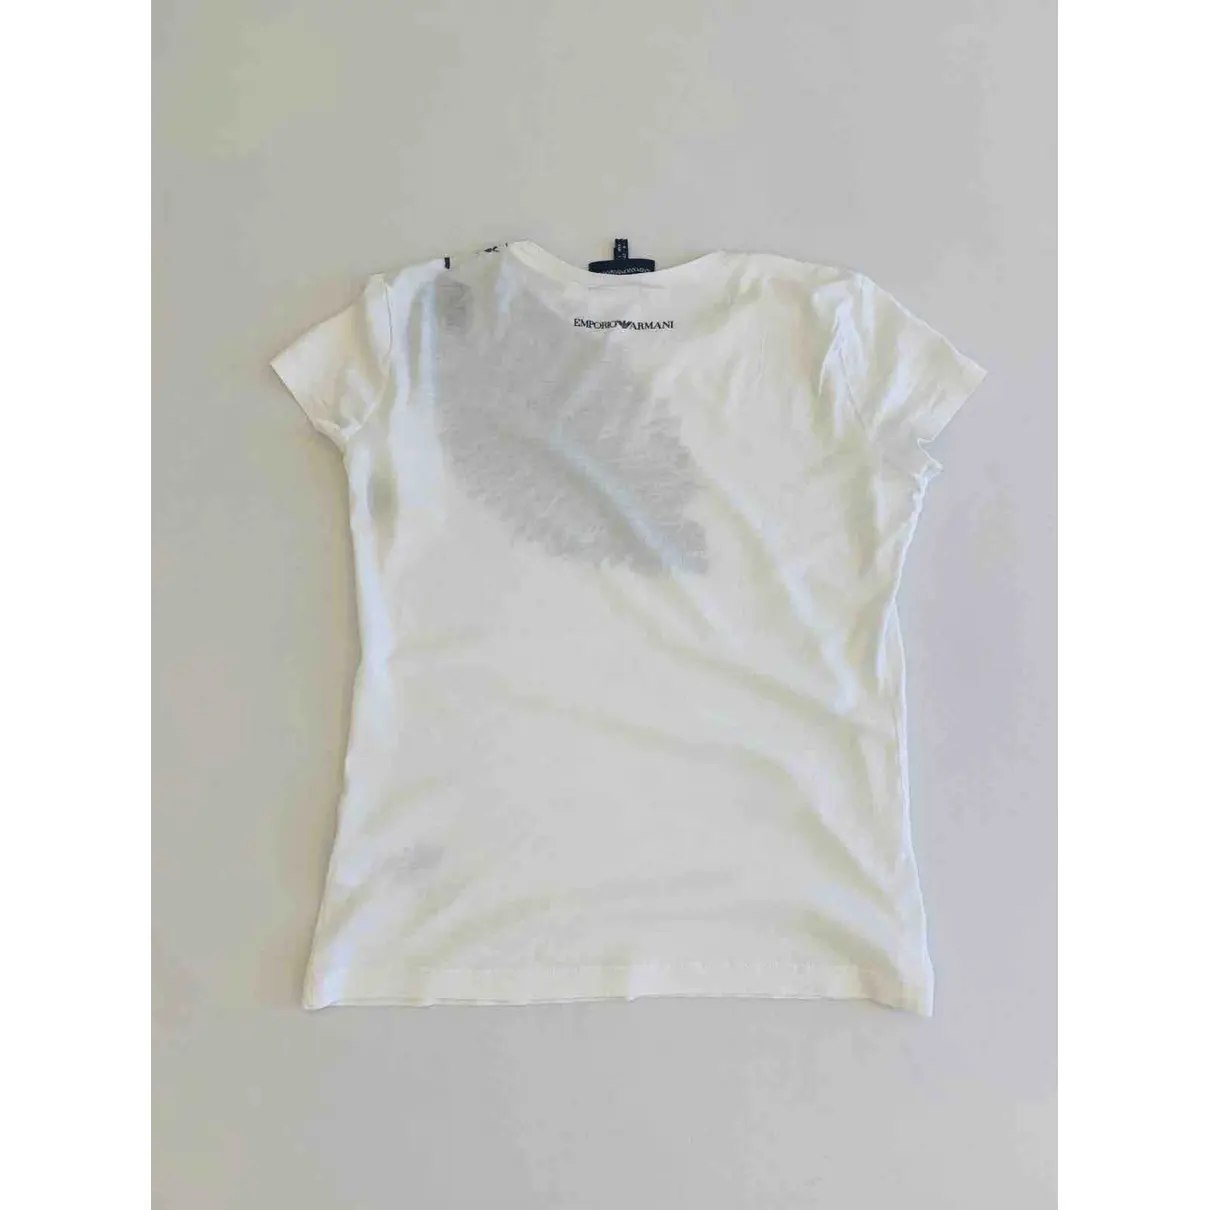 Emporio Armani T-shirt for sale